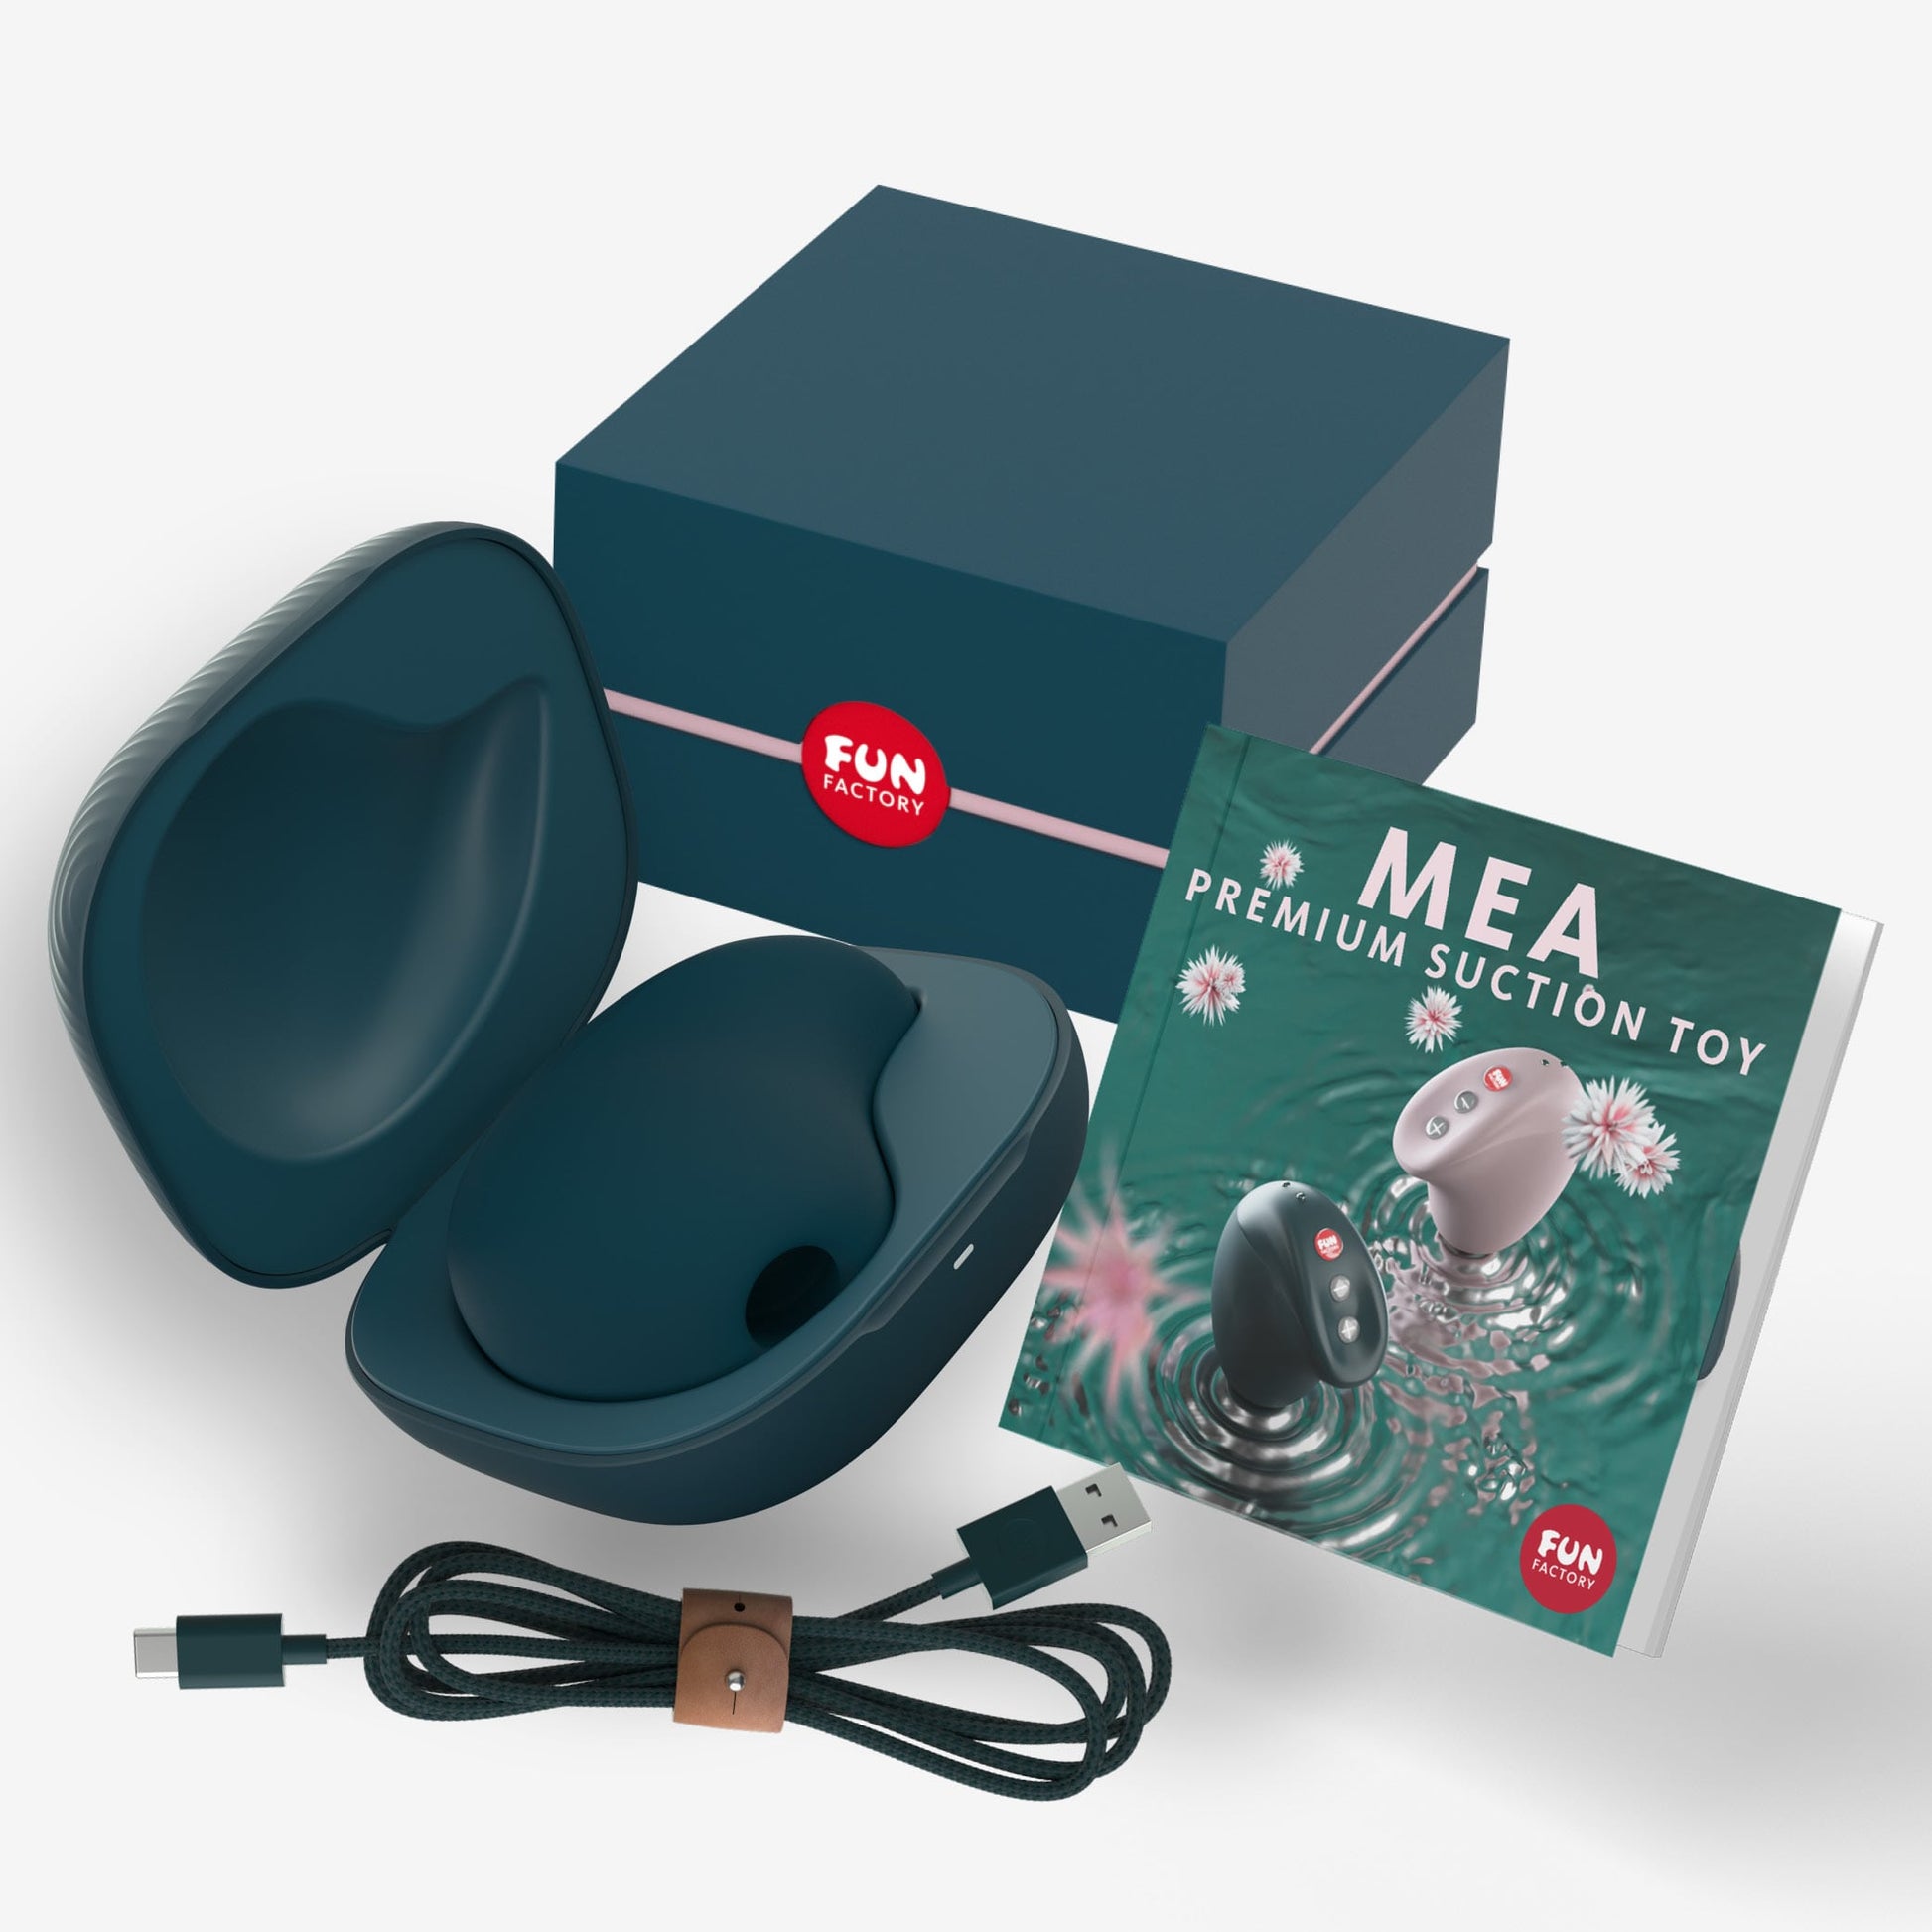 MEA - Premium Suction Toy